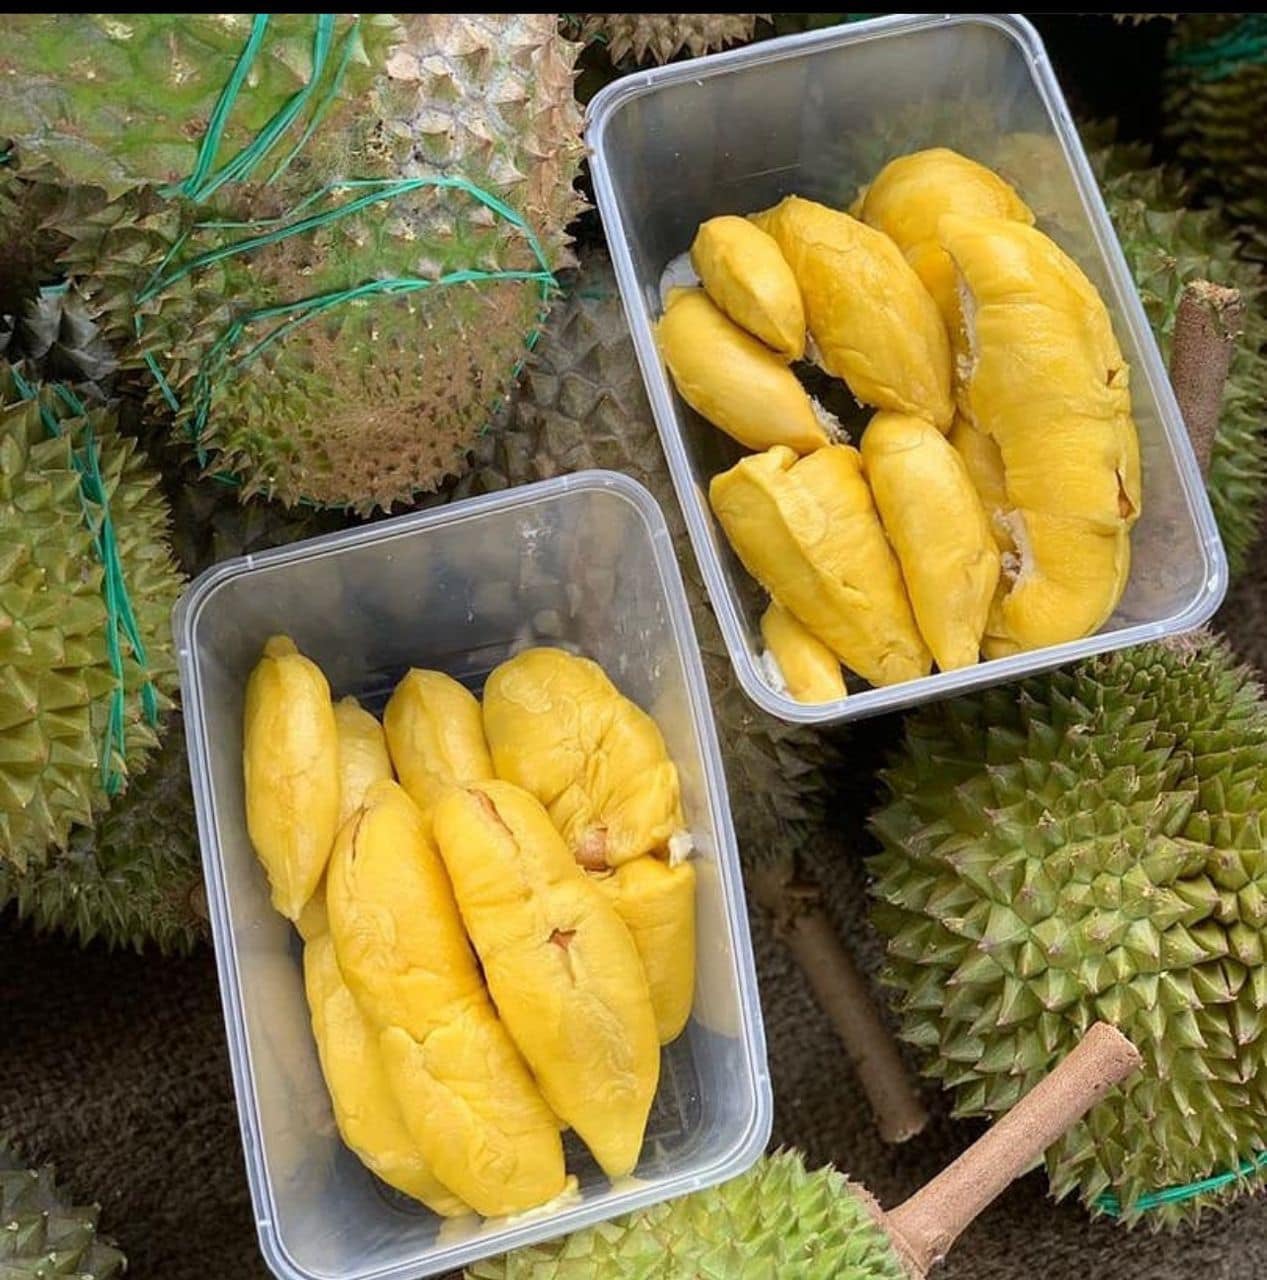 Rizky Durian Pregnant Woman Free Durian 8